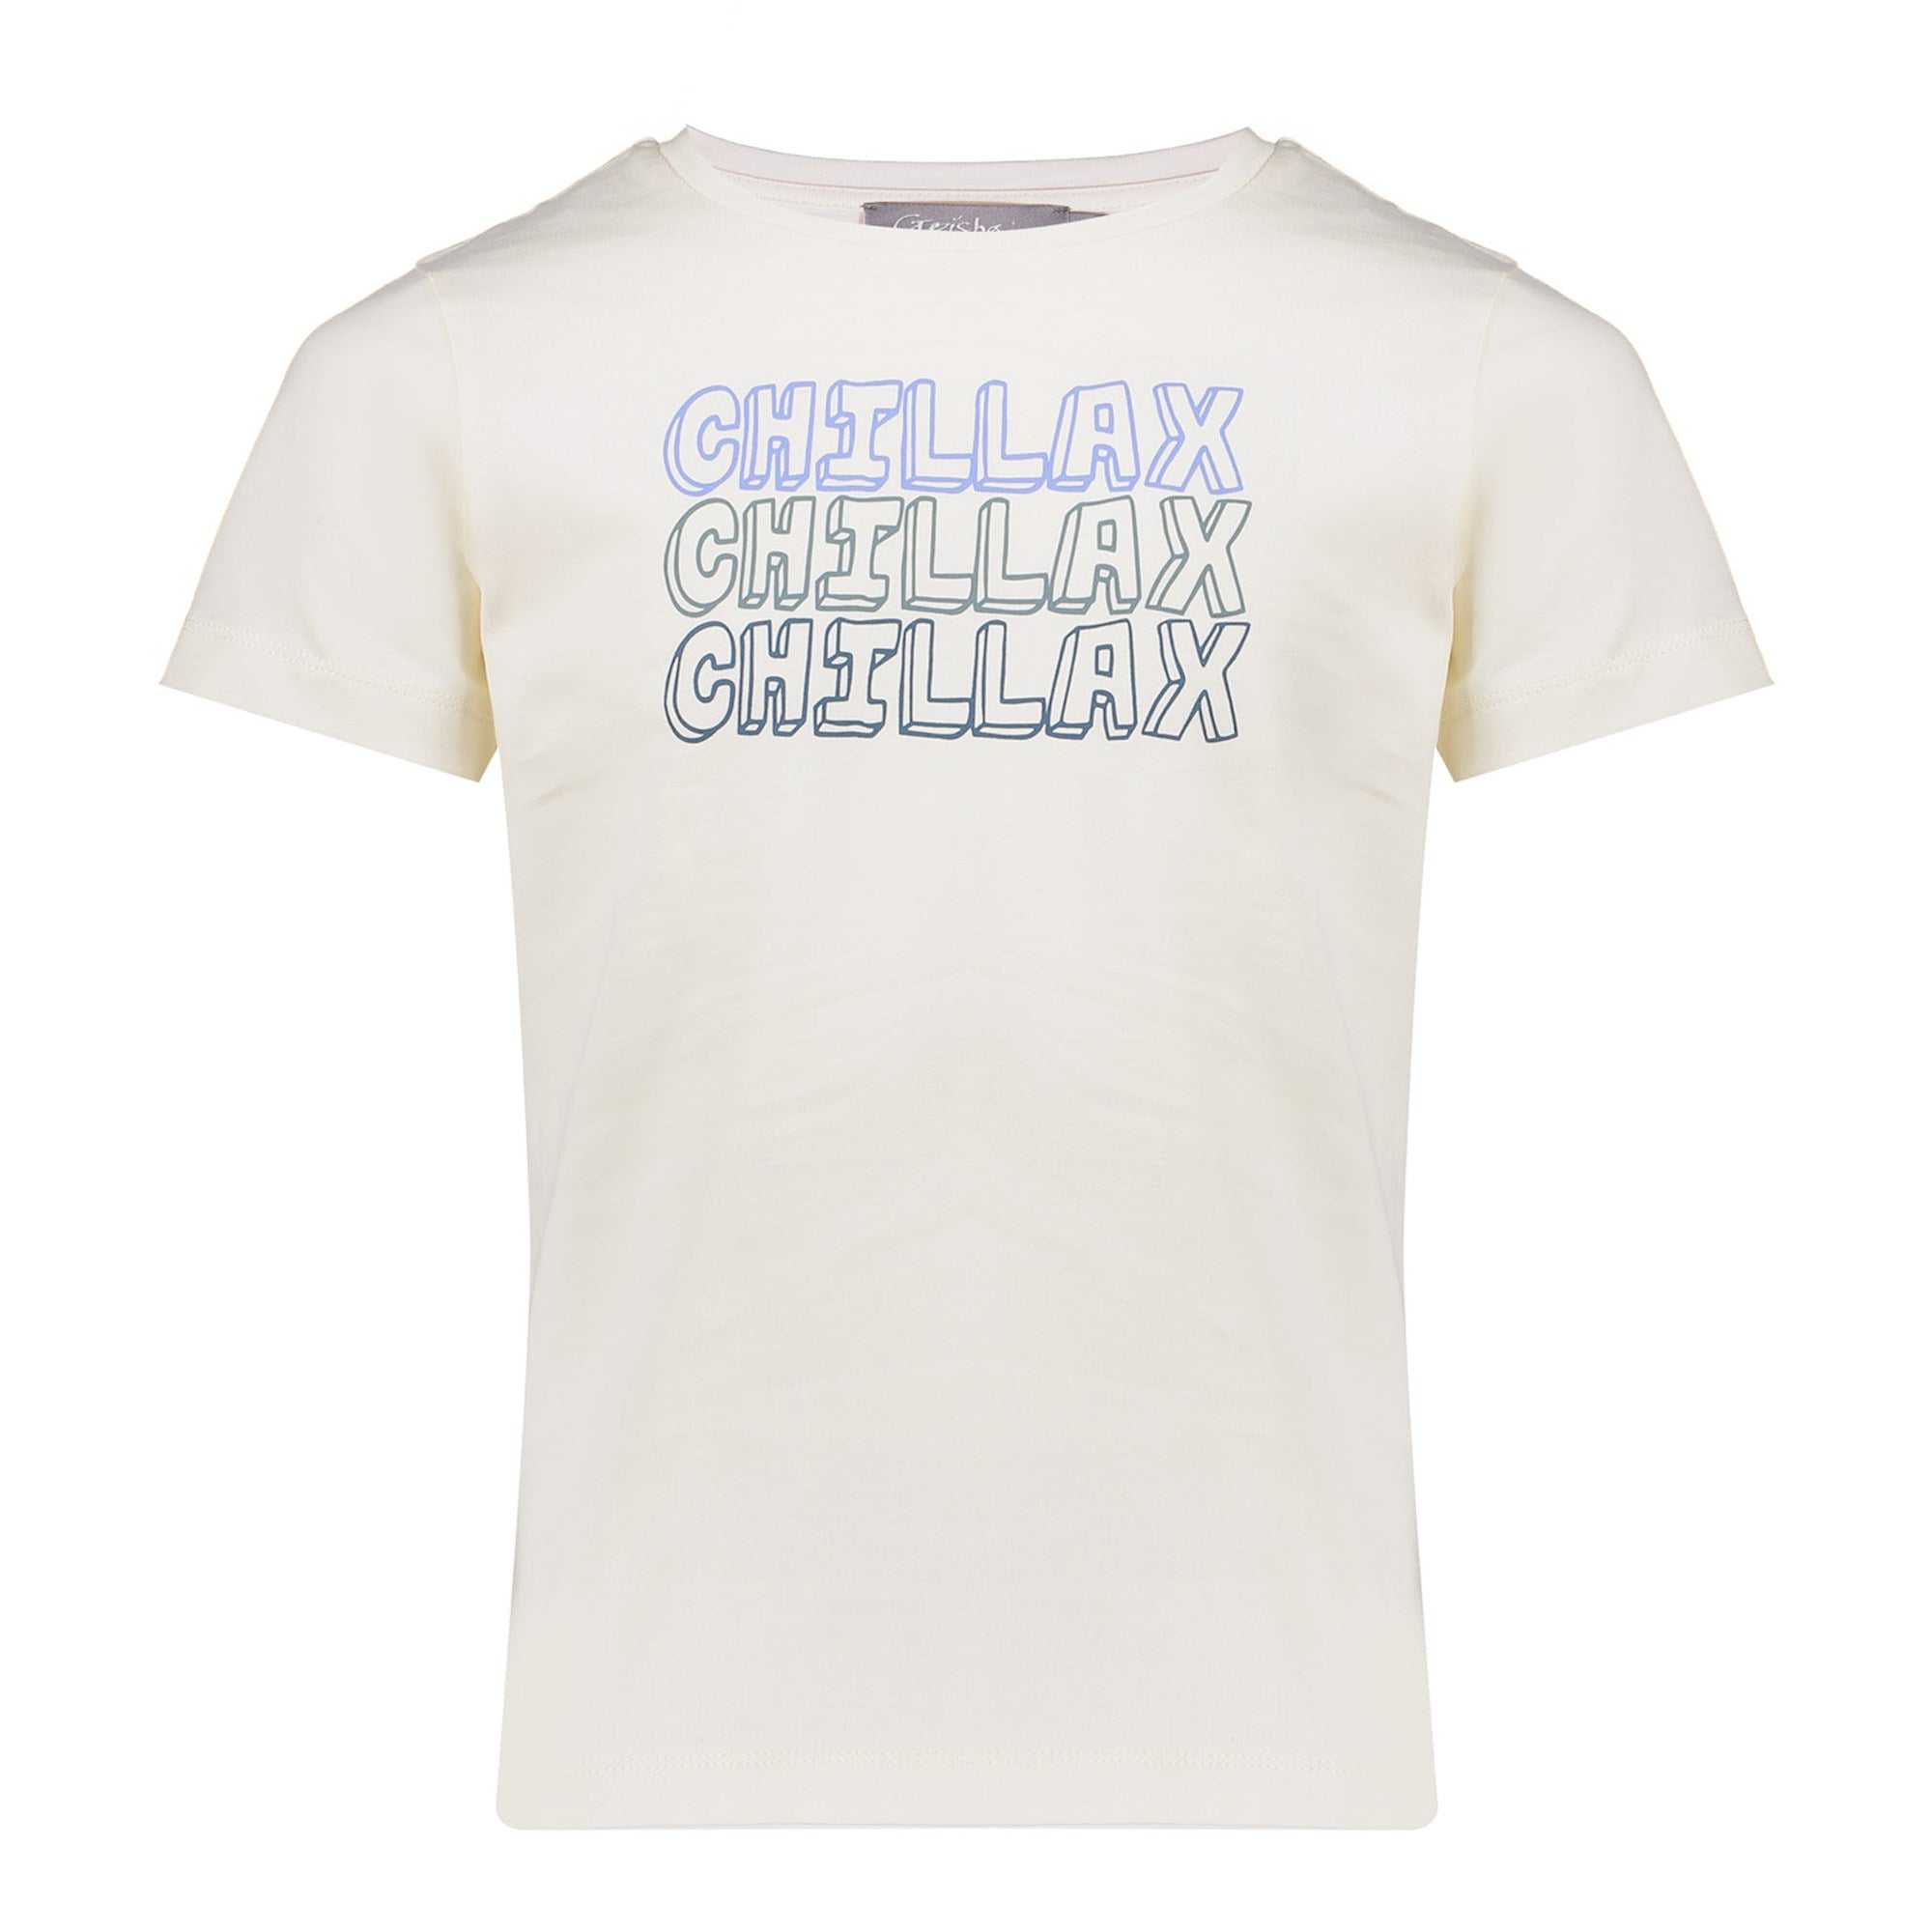 Geisha T-shirt chillax